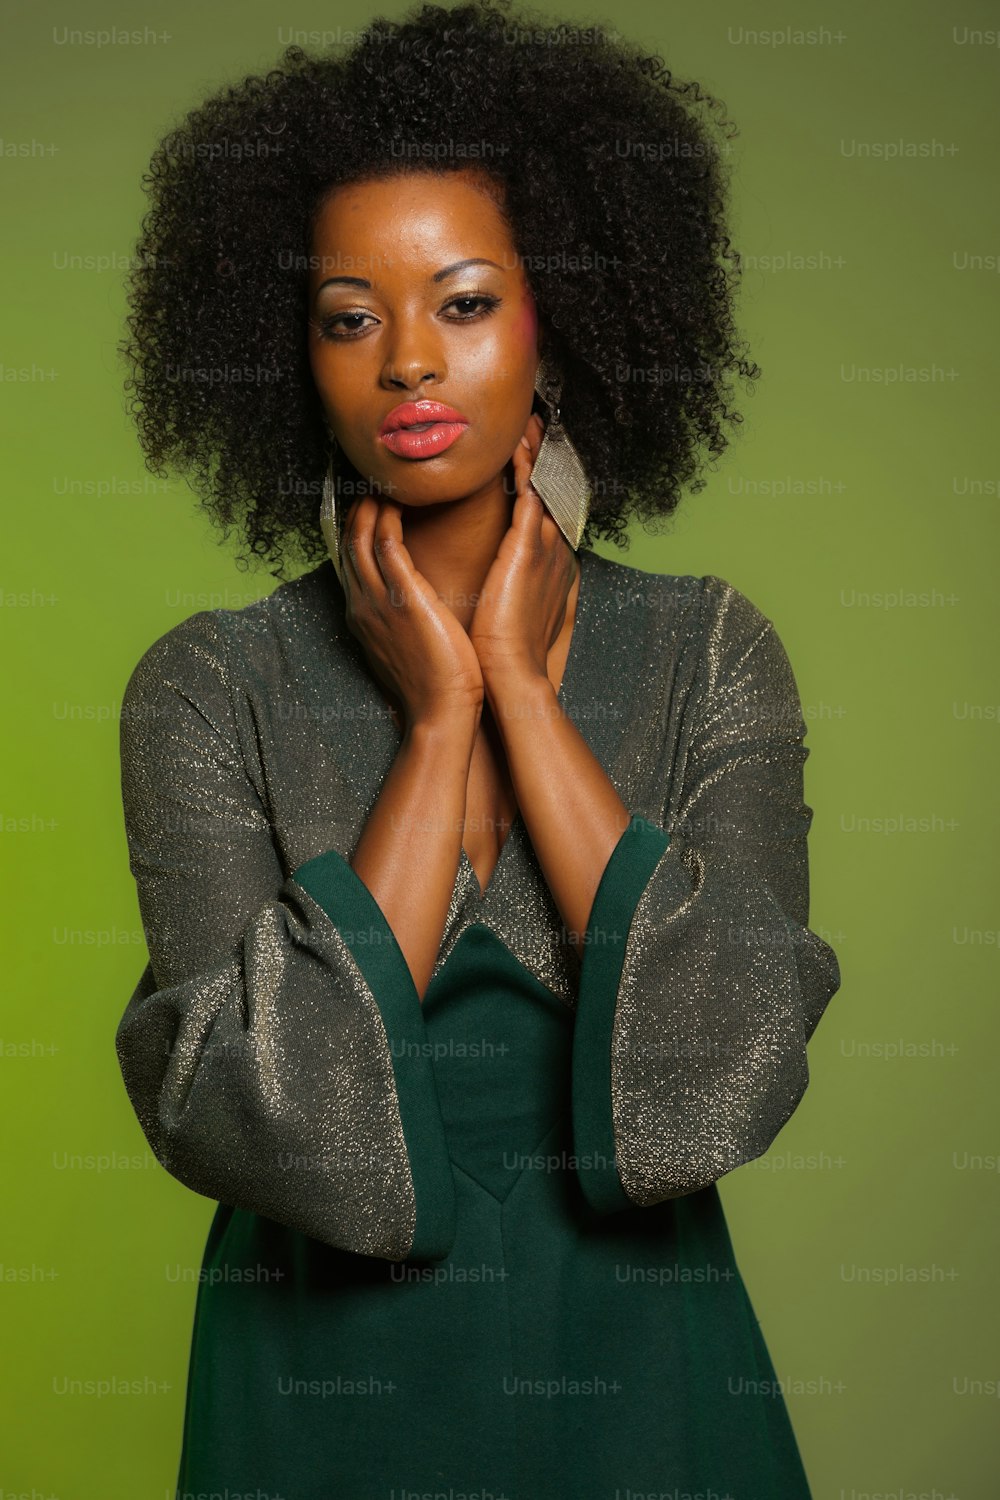 Vintage 70s Fashion Afro Woman. White Shirt And Jeans Against Brown  Background. Banco de Imagens Royalty Free, Ilustrações, Imagens e Banco de  Imagens. Image 20281303.